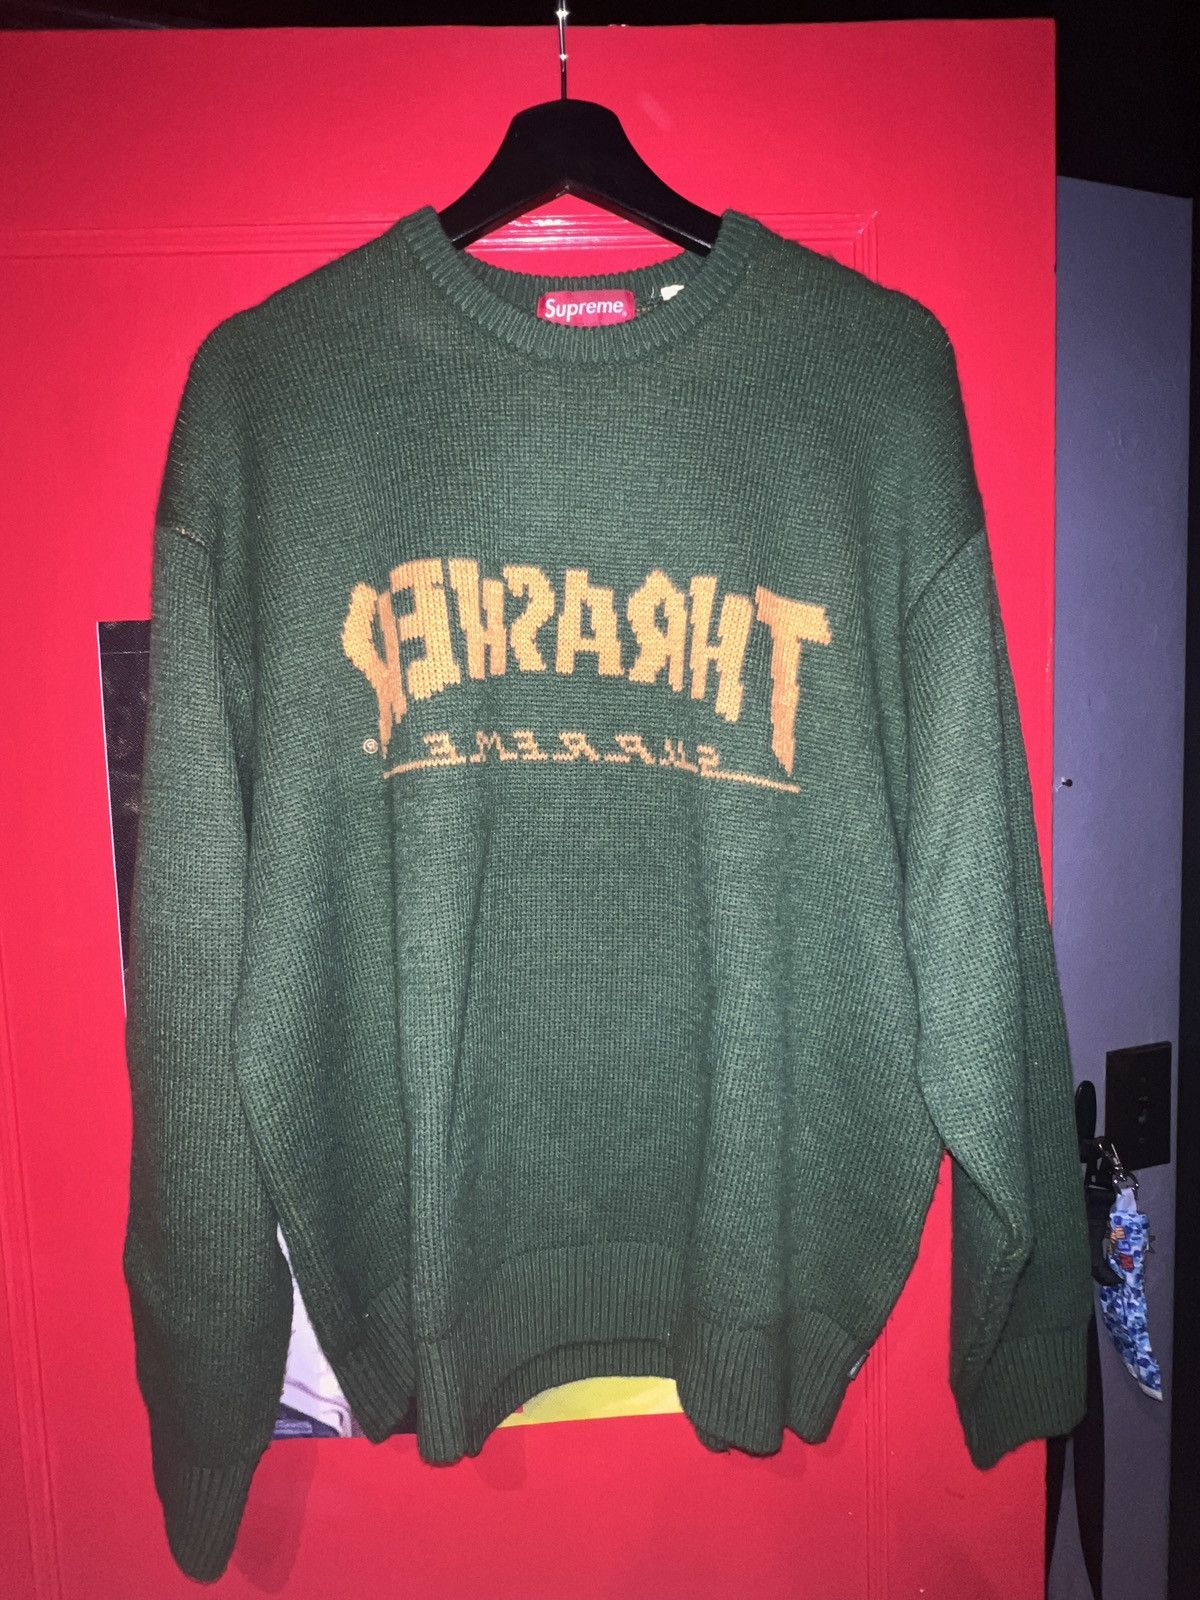 Supreme Supreme x thrasher sweater green | Grailed